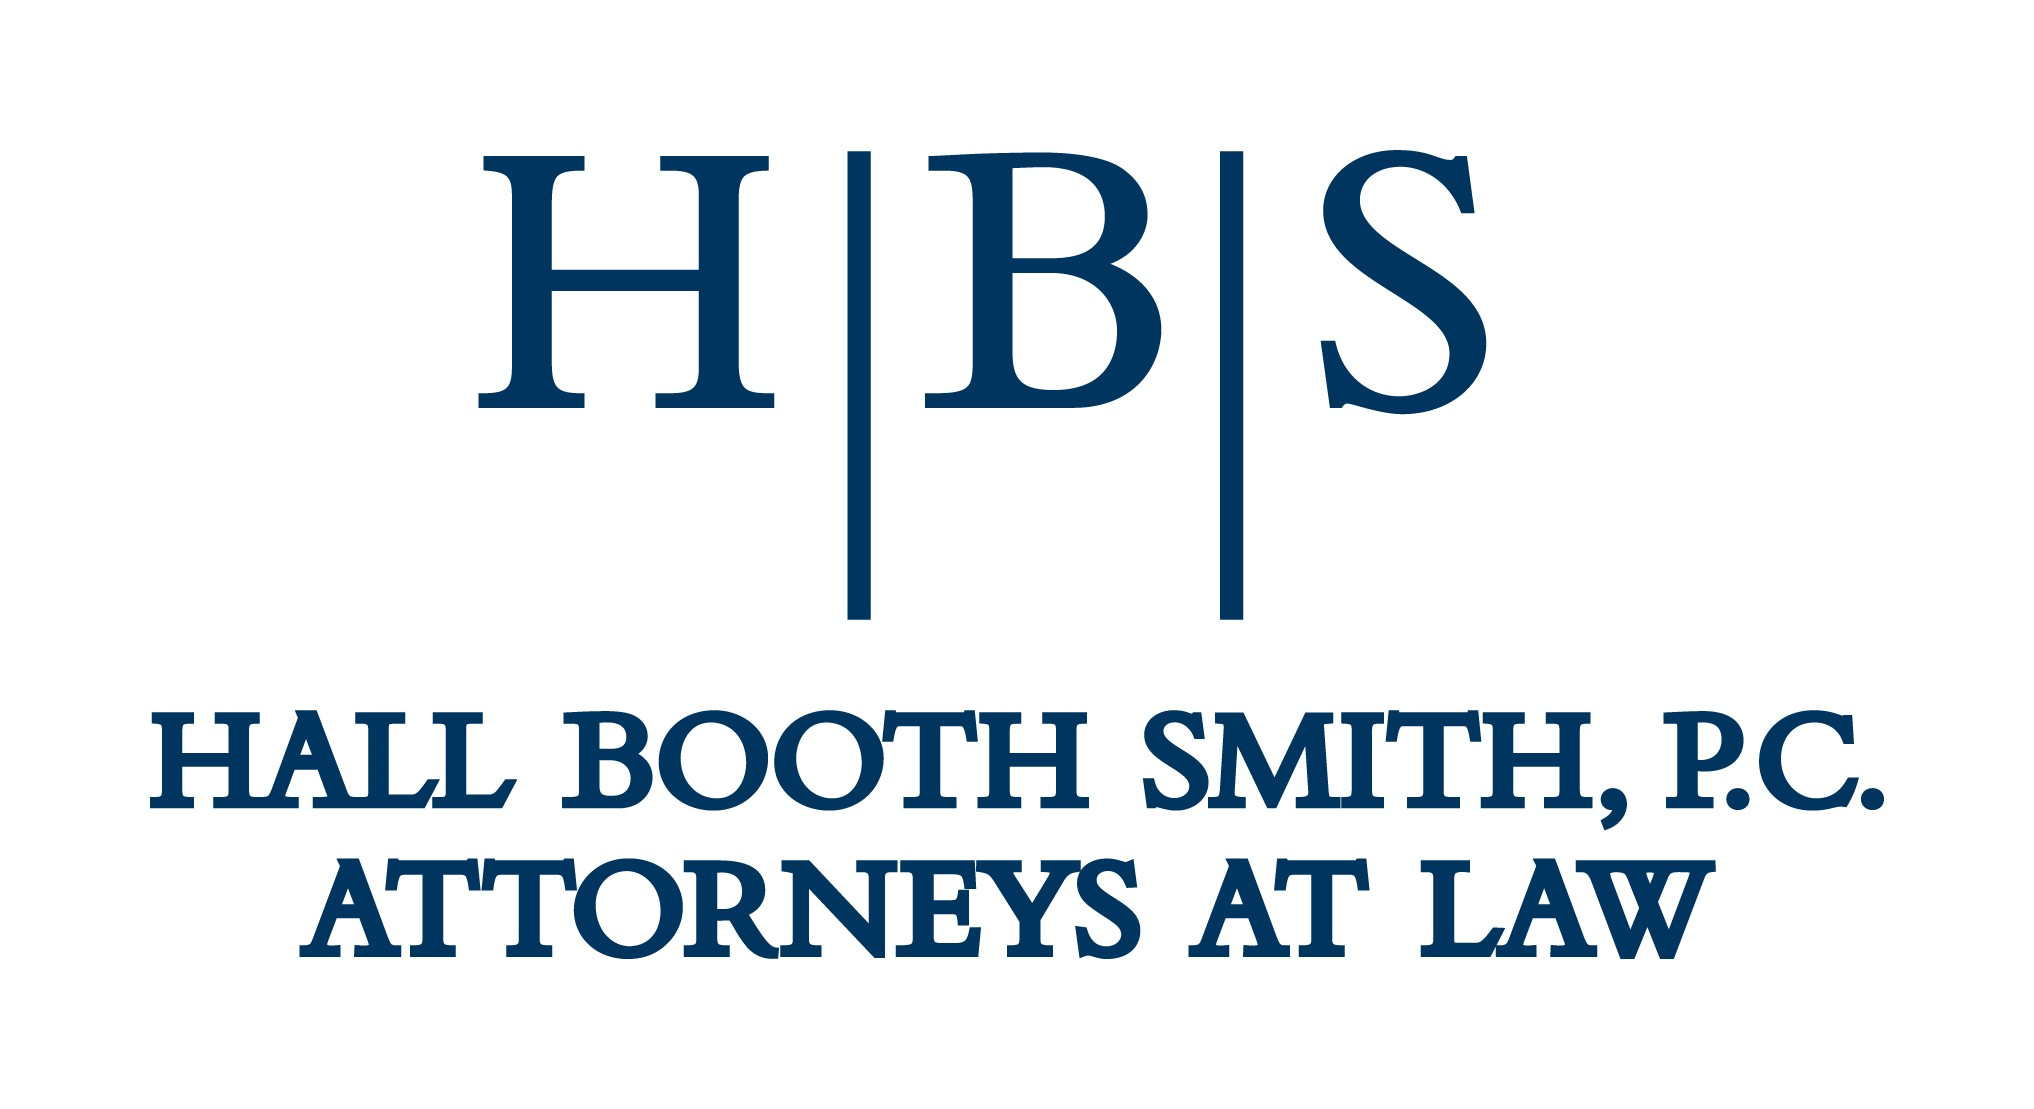 Hall Booth Smith logo